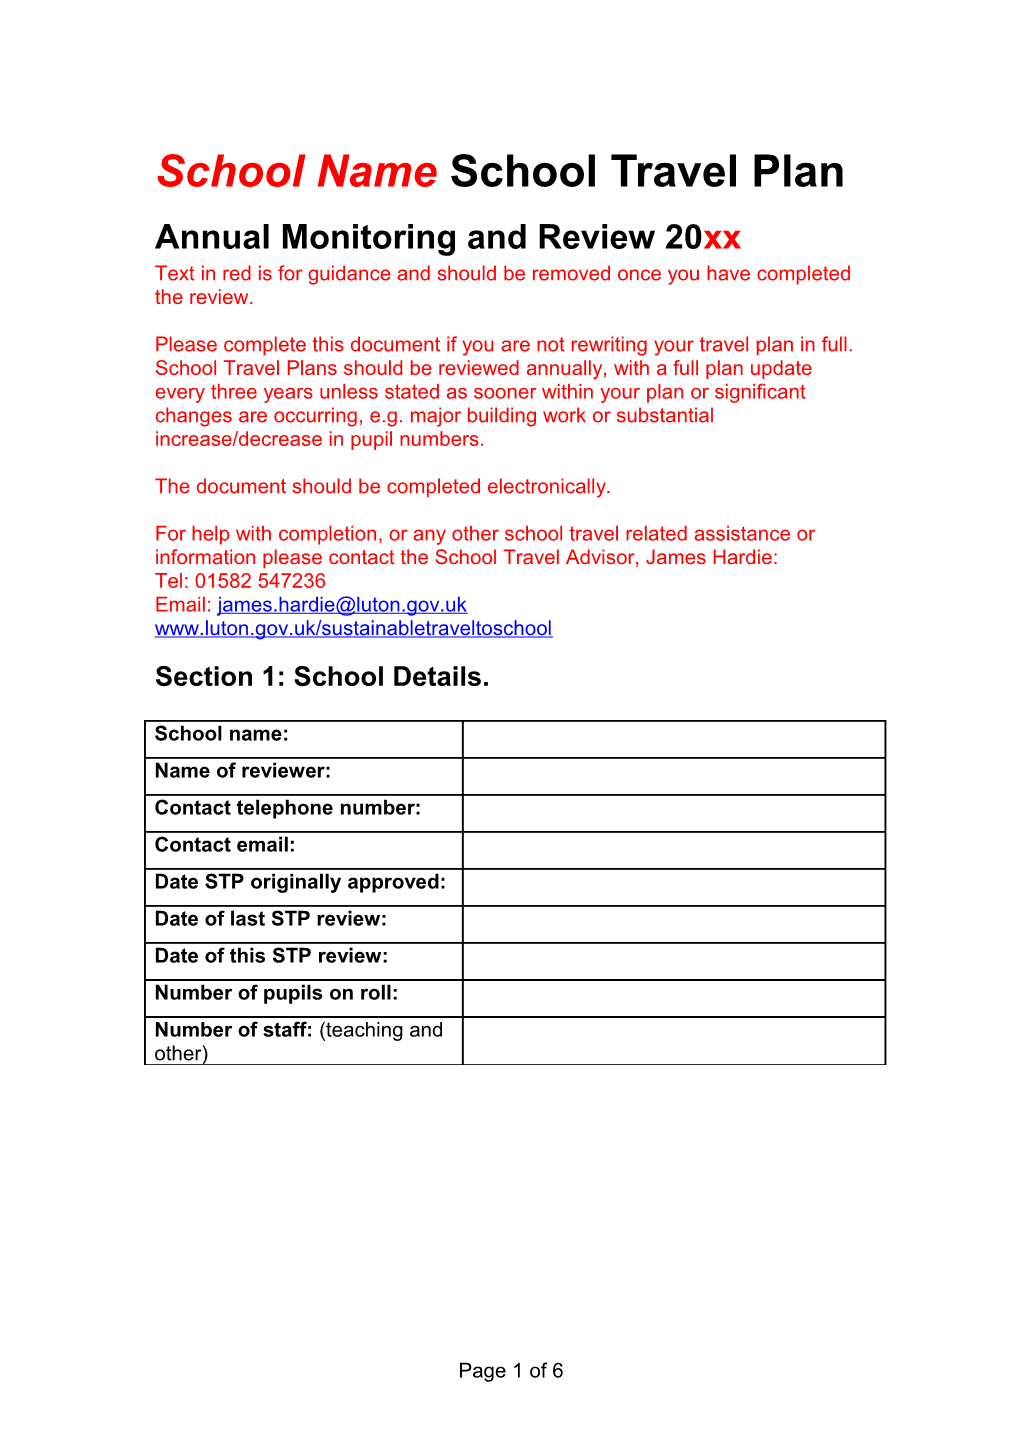 School Travel Plan Monitoring Form